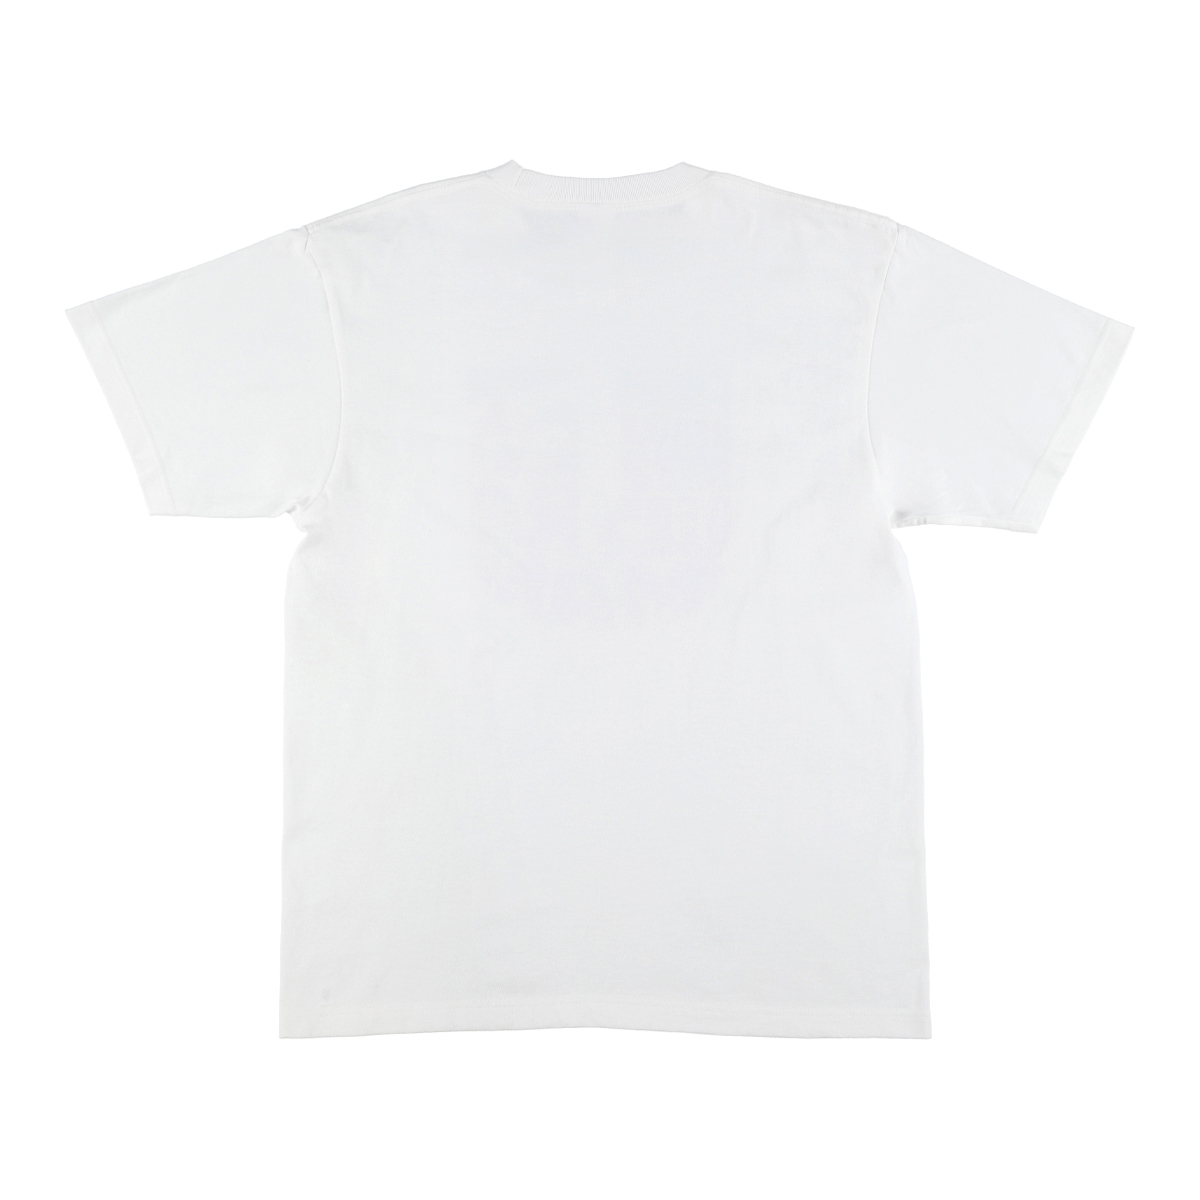 Tシャツ U ホワイト 47540 《ウルトラマンSHOP限定》